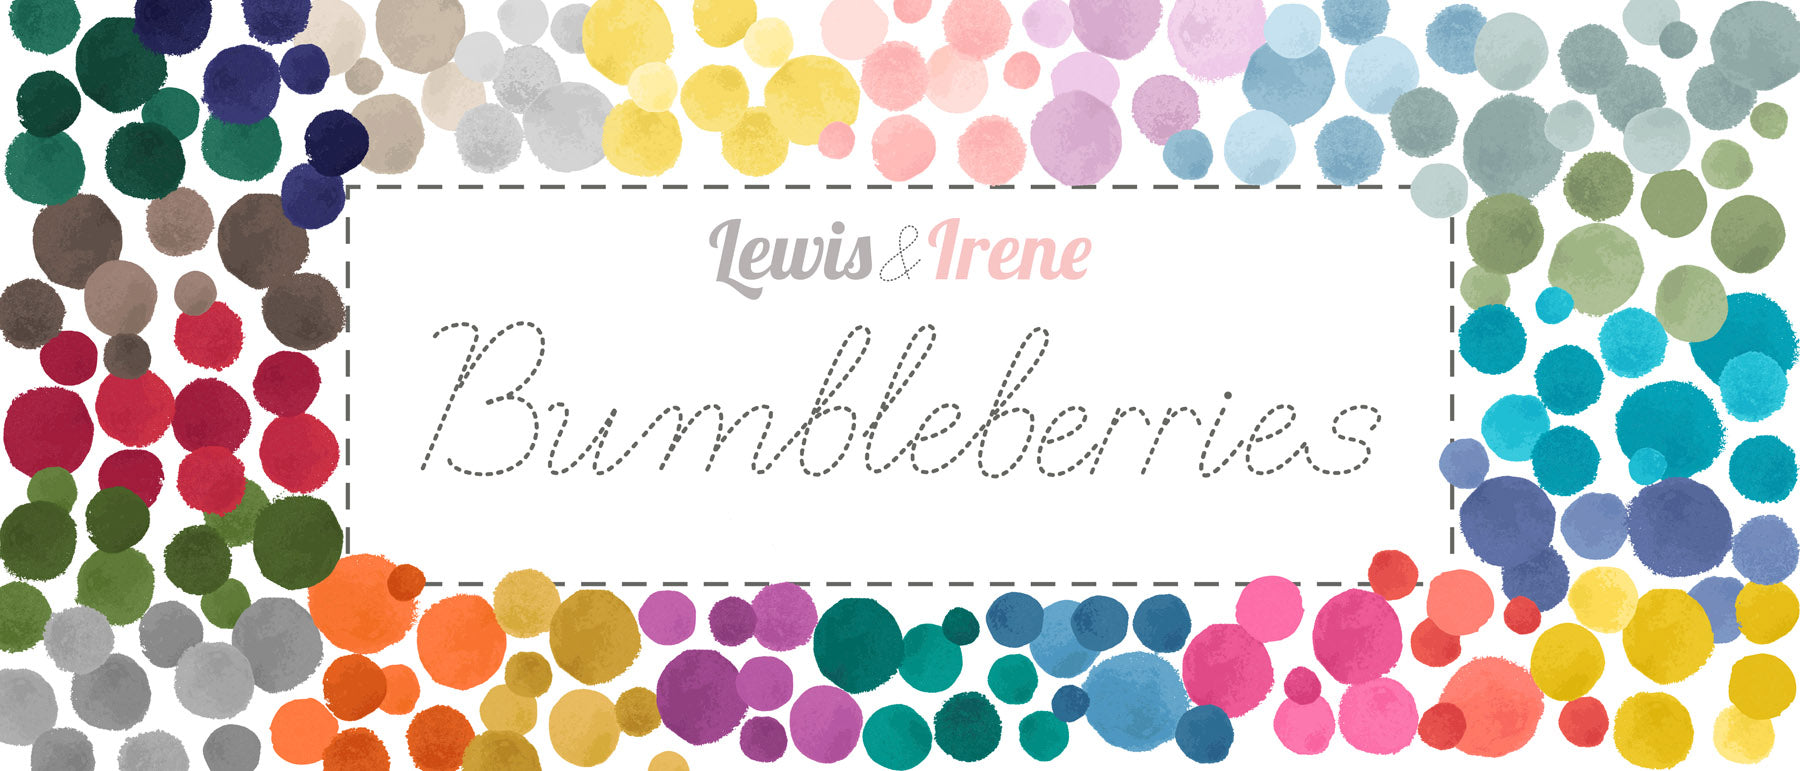 Bumbleberries Basics by Lewis & Irene